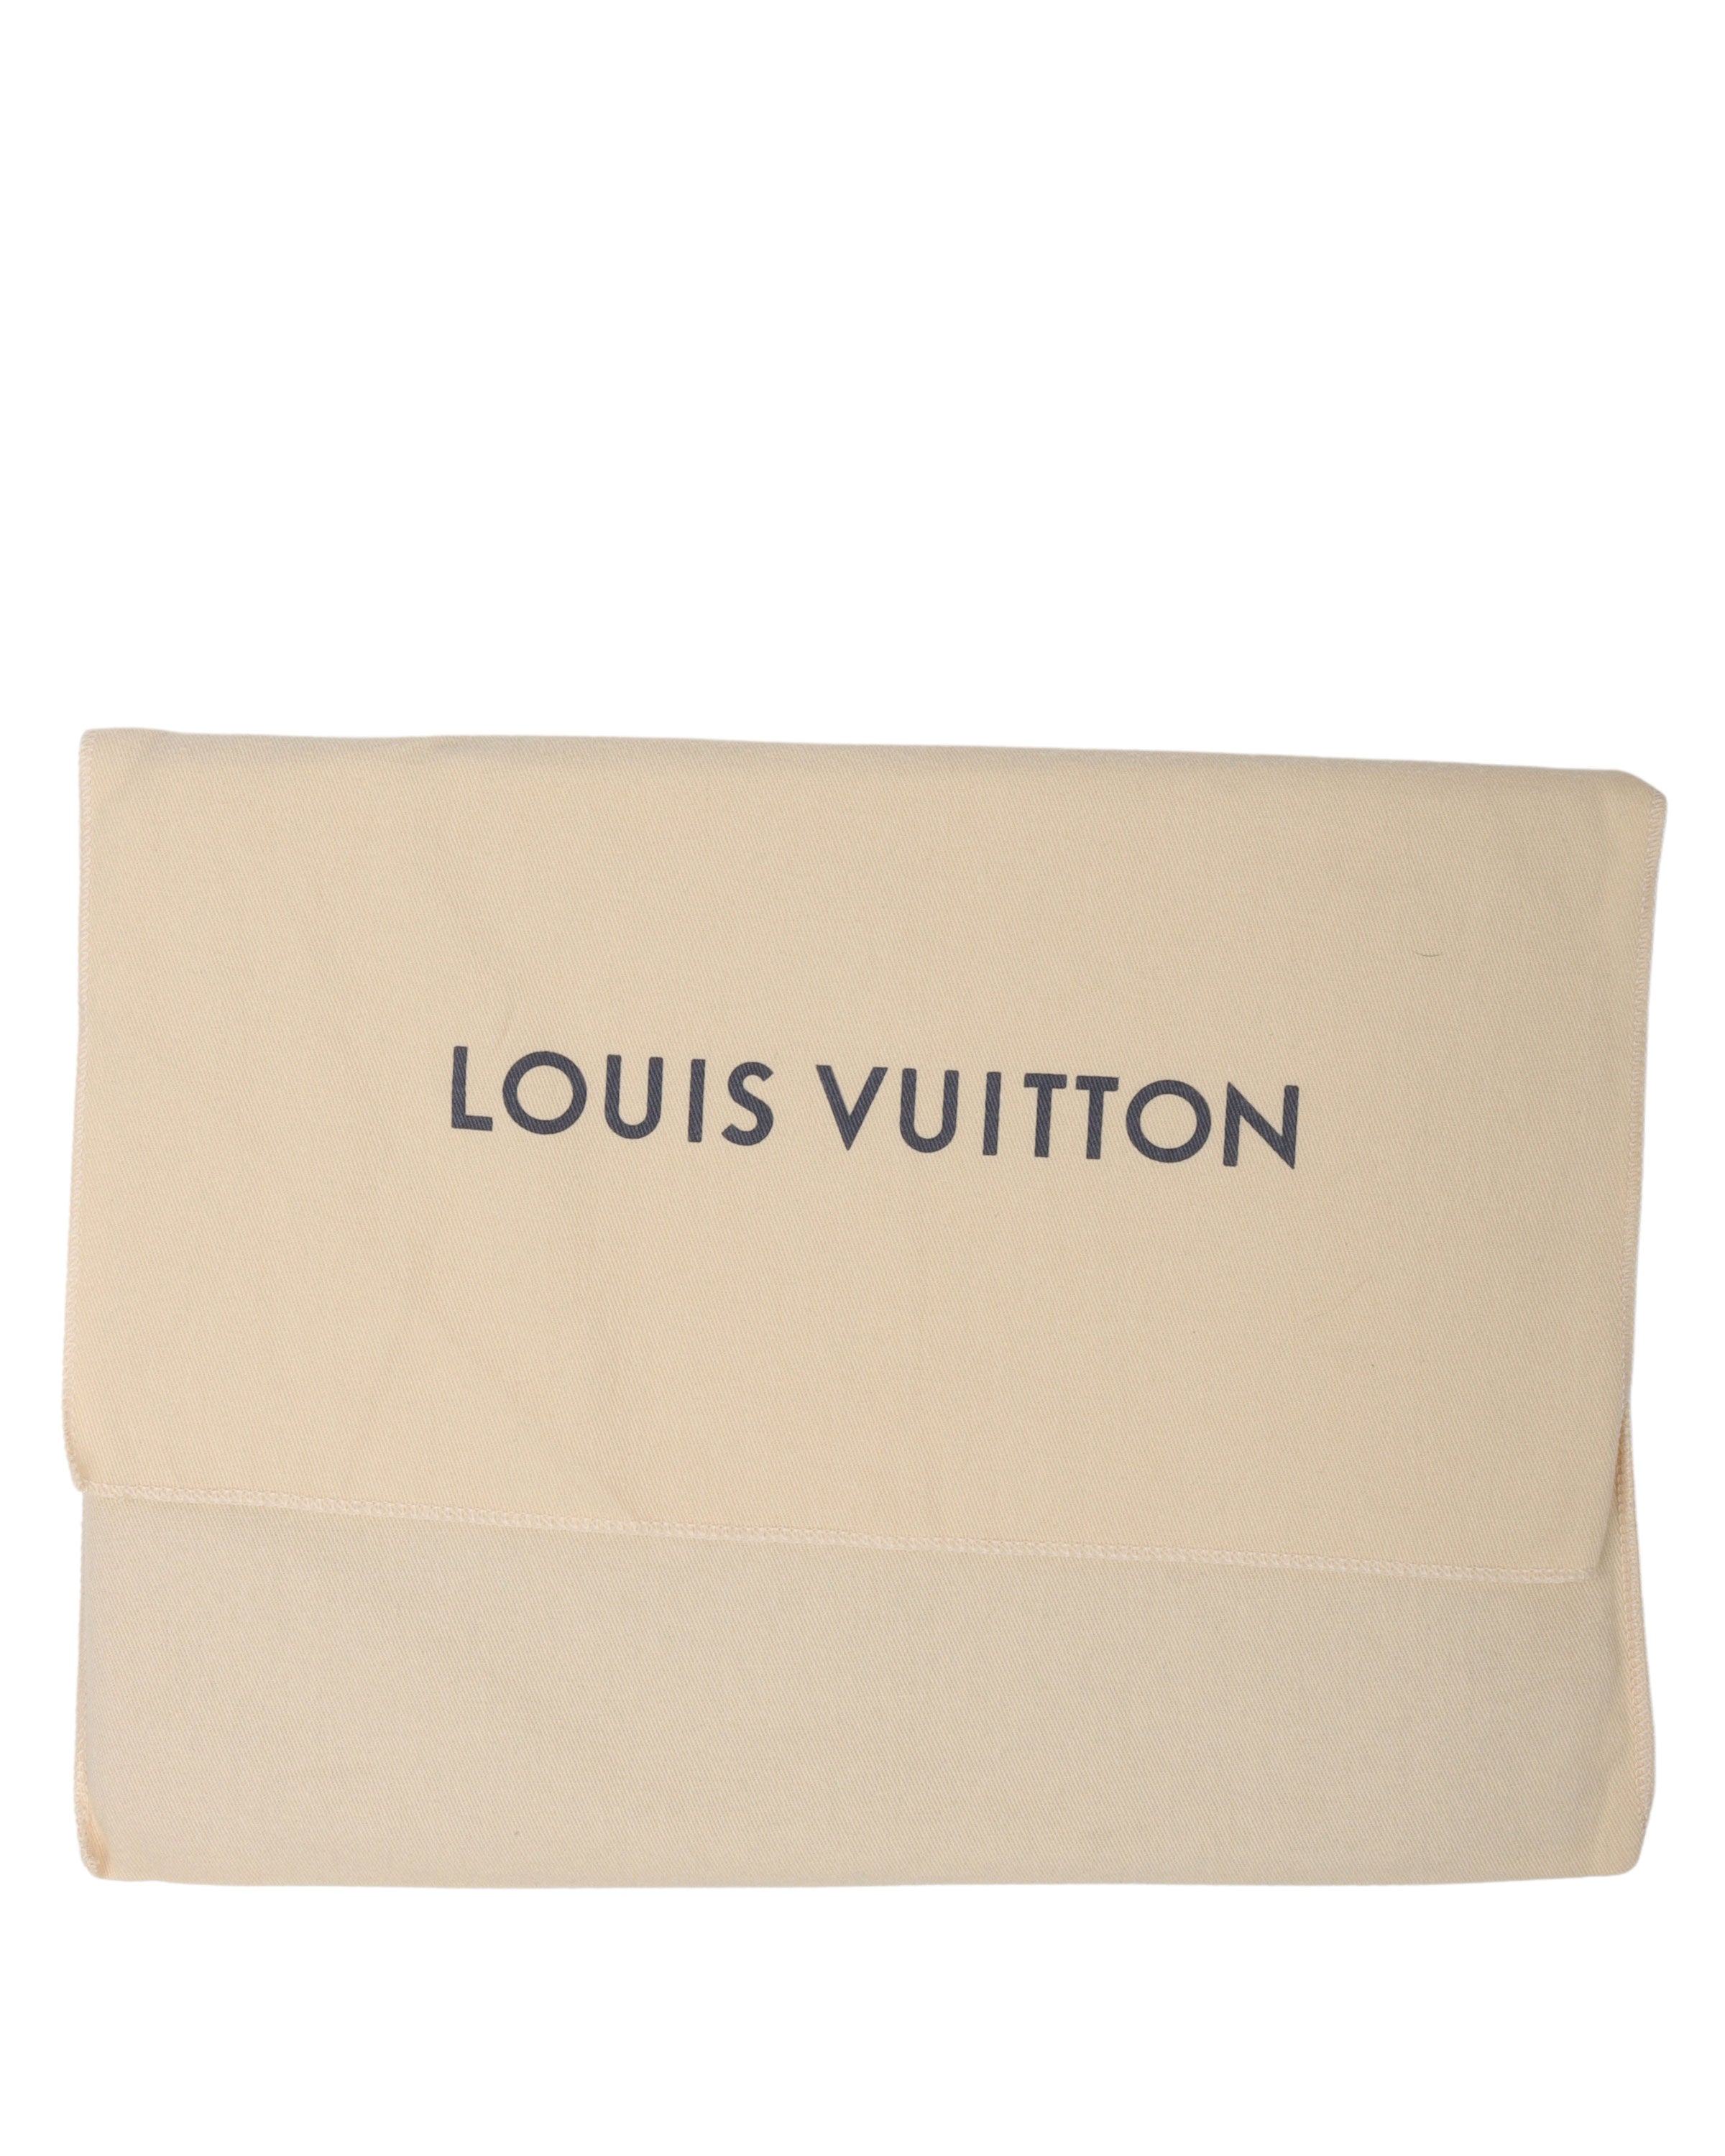 Louis Vuitton Monogram Document Holder - 4 For Sale on 1stDibs  lv file  bag, louis vuitton document holder, lv document holder